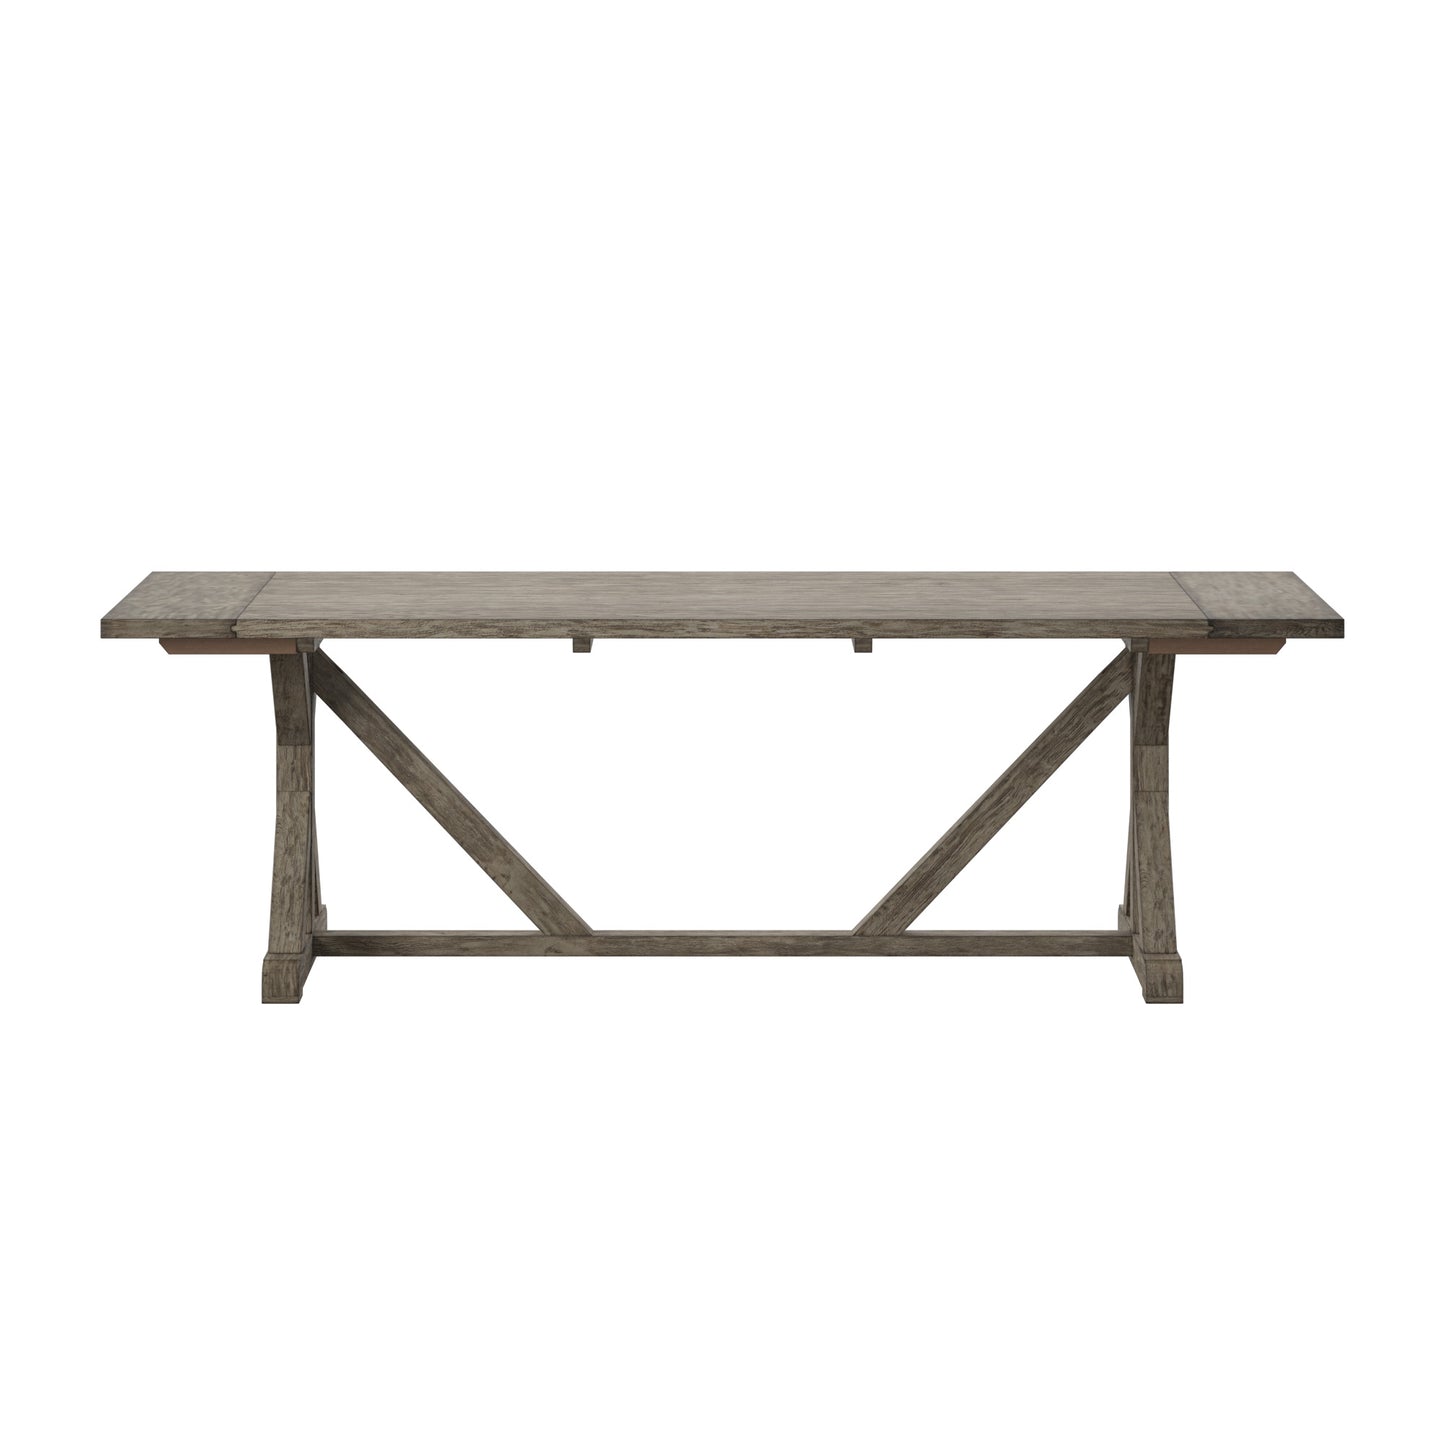 Rustic Reclaimed Wood Rectangular Trestle Base Table - Antique Grey Oak Finish